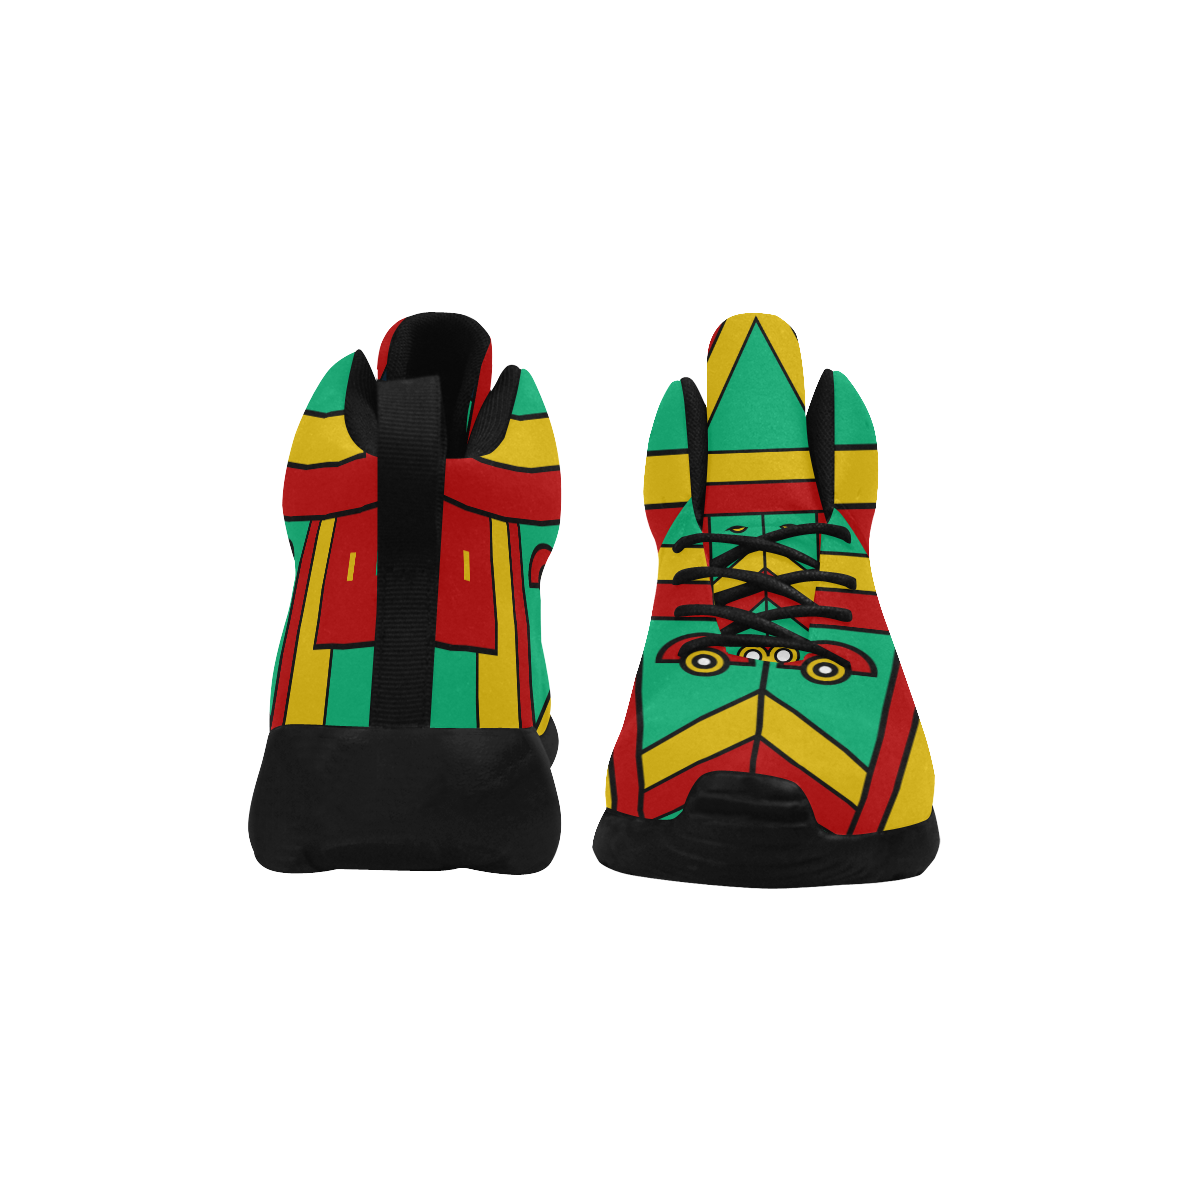 Aztec Spiritual Tribal Women's Chukka Training Shoes (Model 57502)